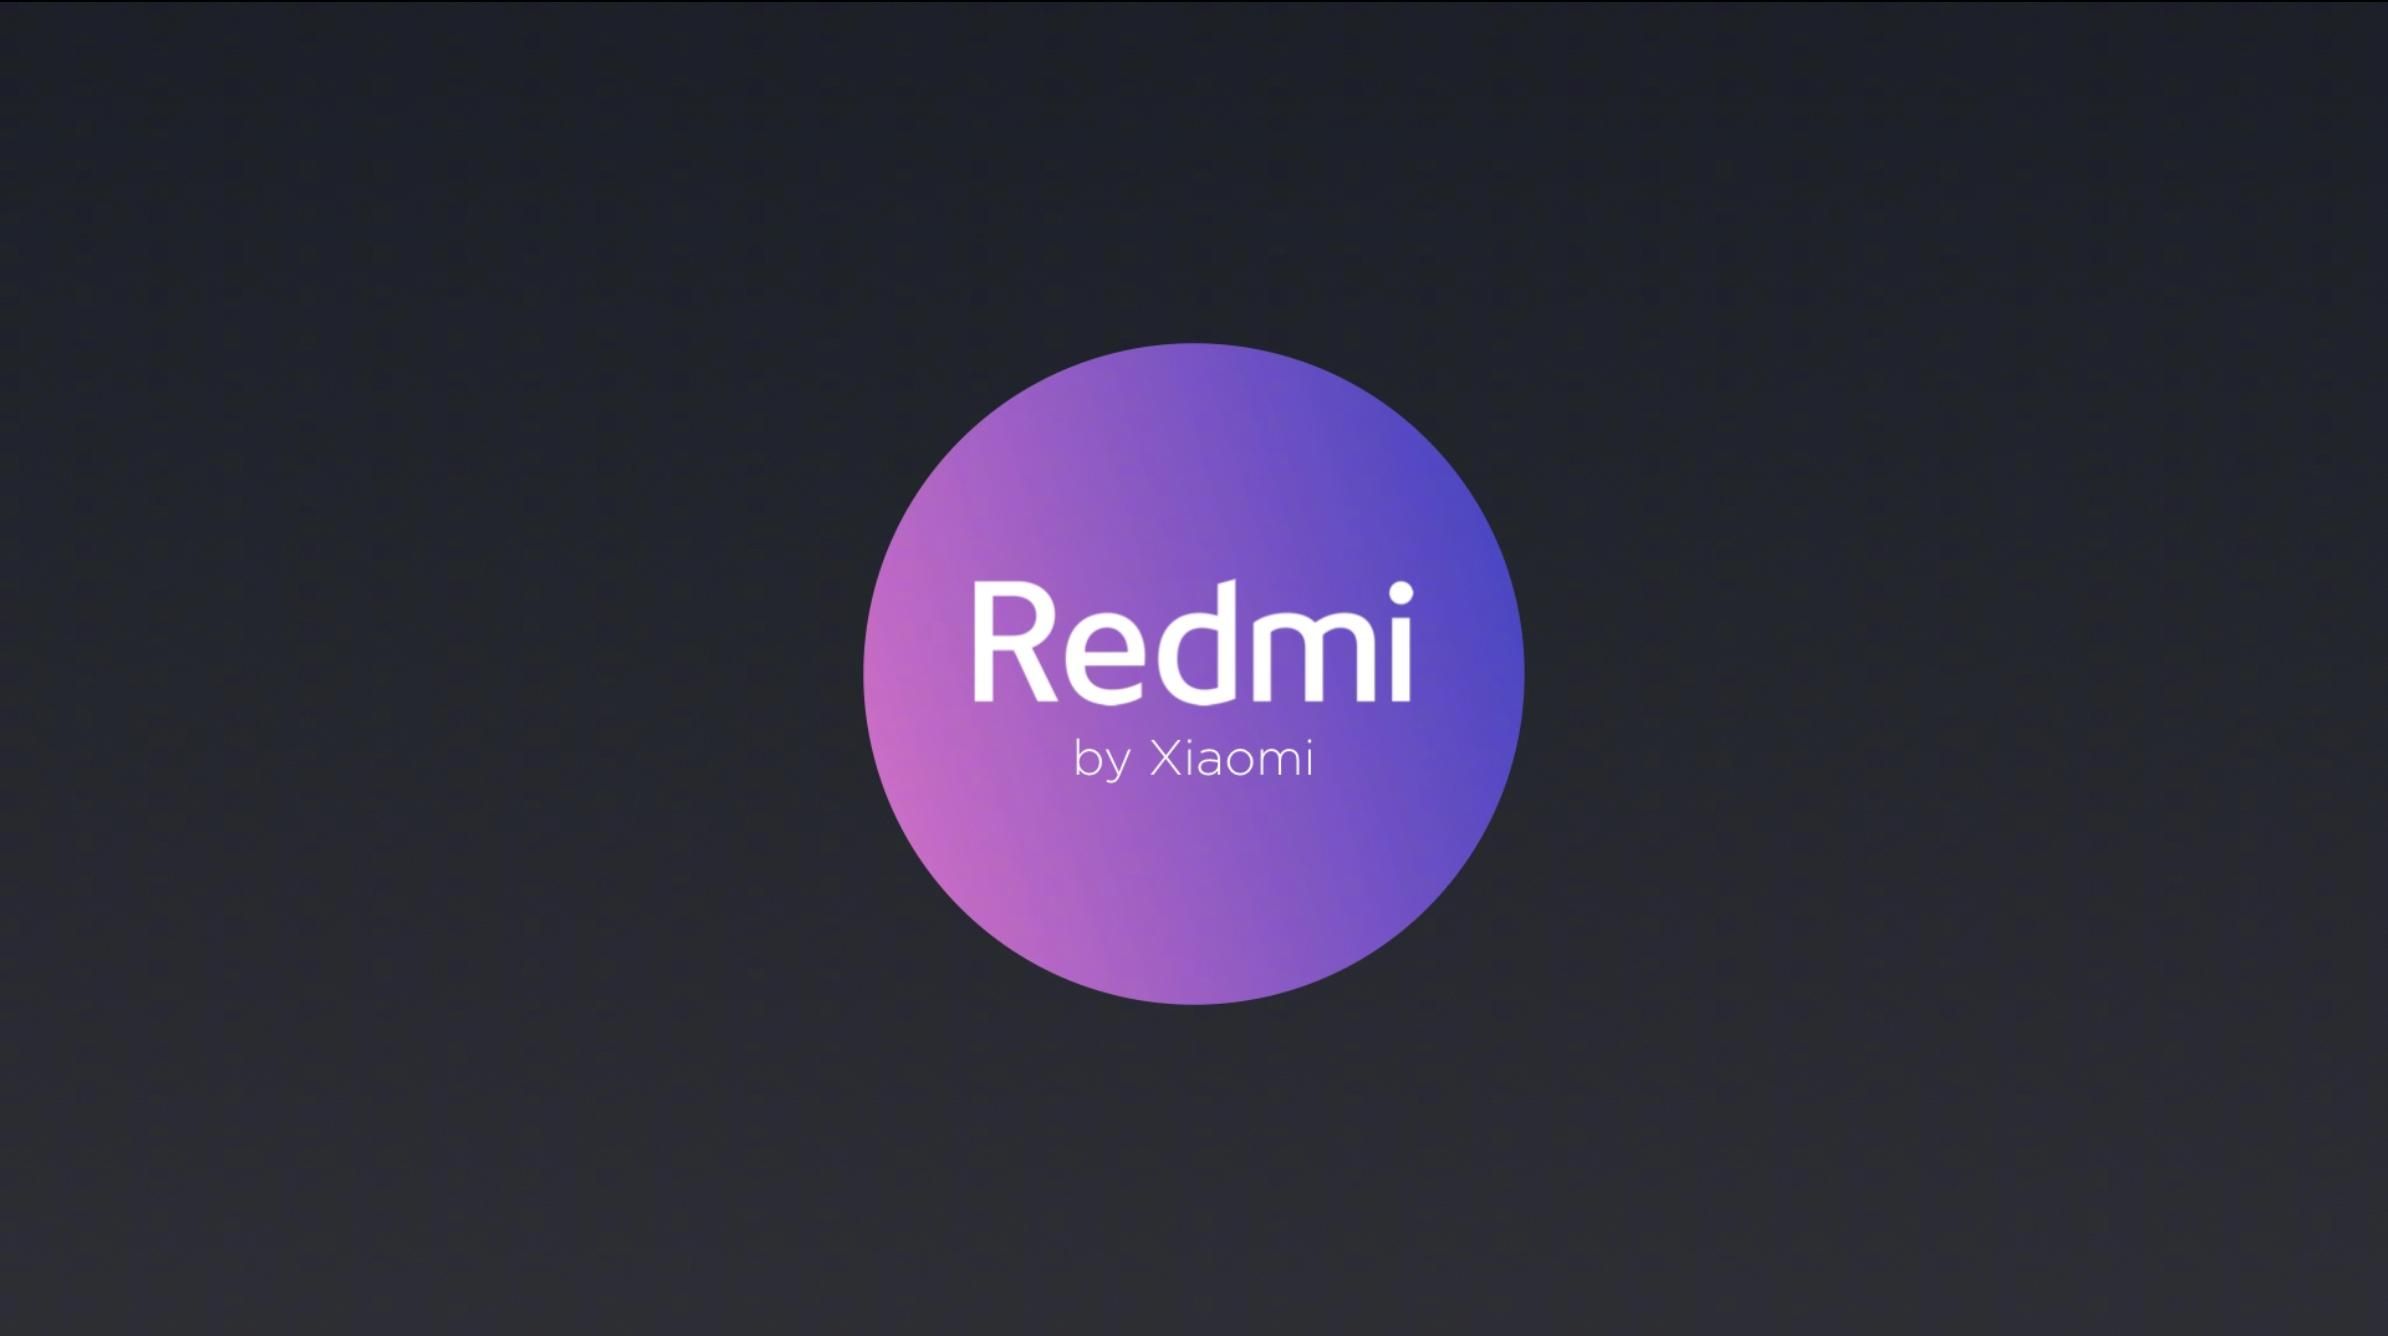 Функция шокирует, – вице-президент Xiaomi о новом смартфоне под брендом Redmi